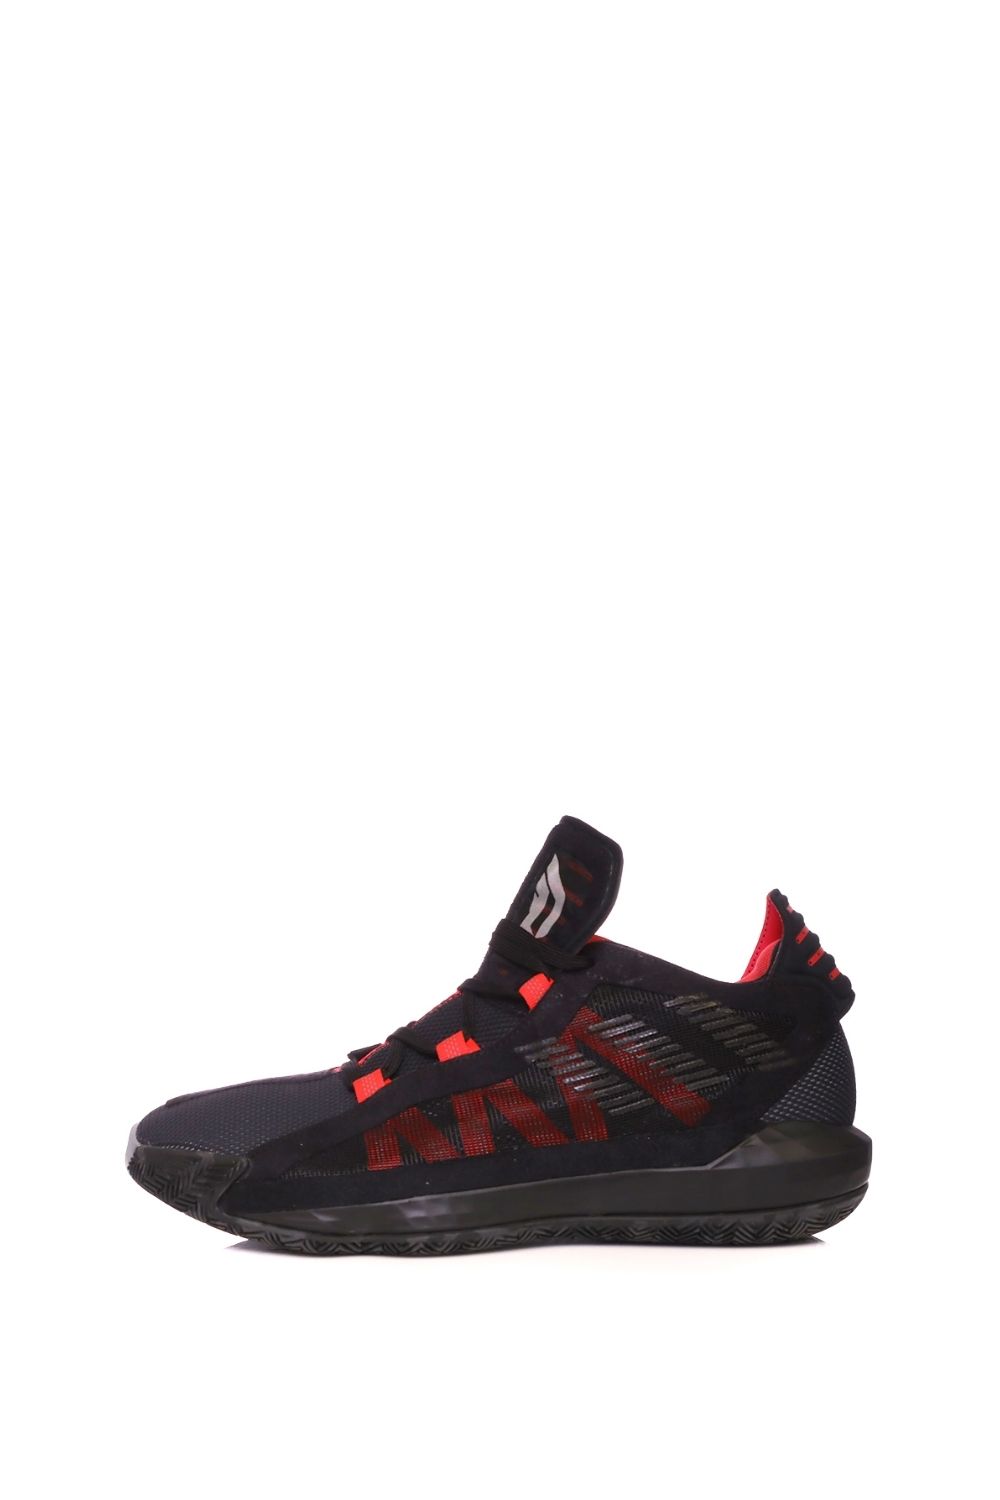 adidas Performance - Unisex παπούτσια μπάσκετ Dame 6 μαύρα Γυναικεία/Παπούτσια/Αθλητικά/Basketball